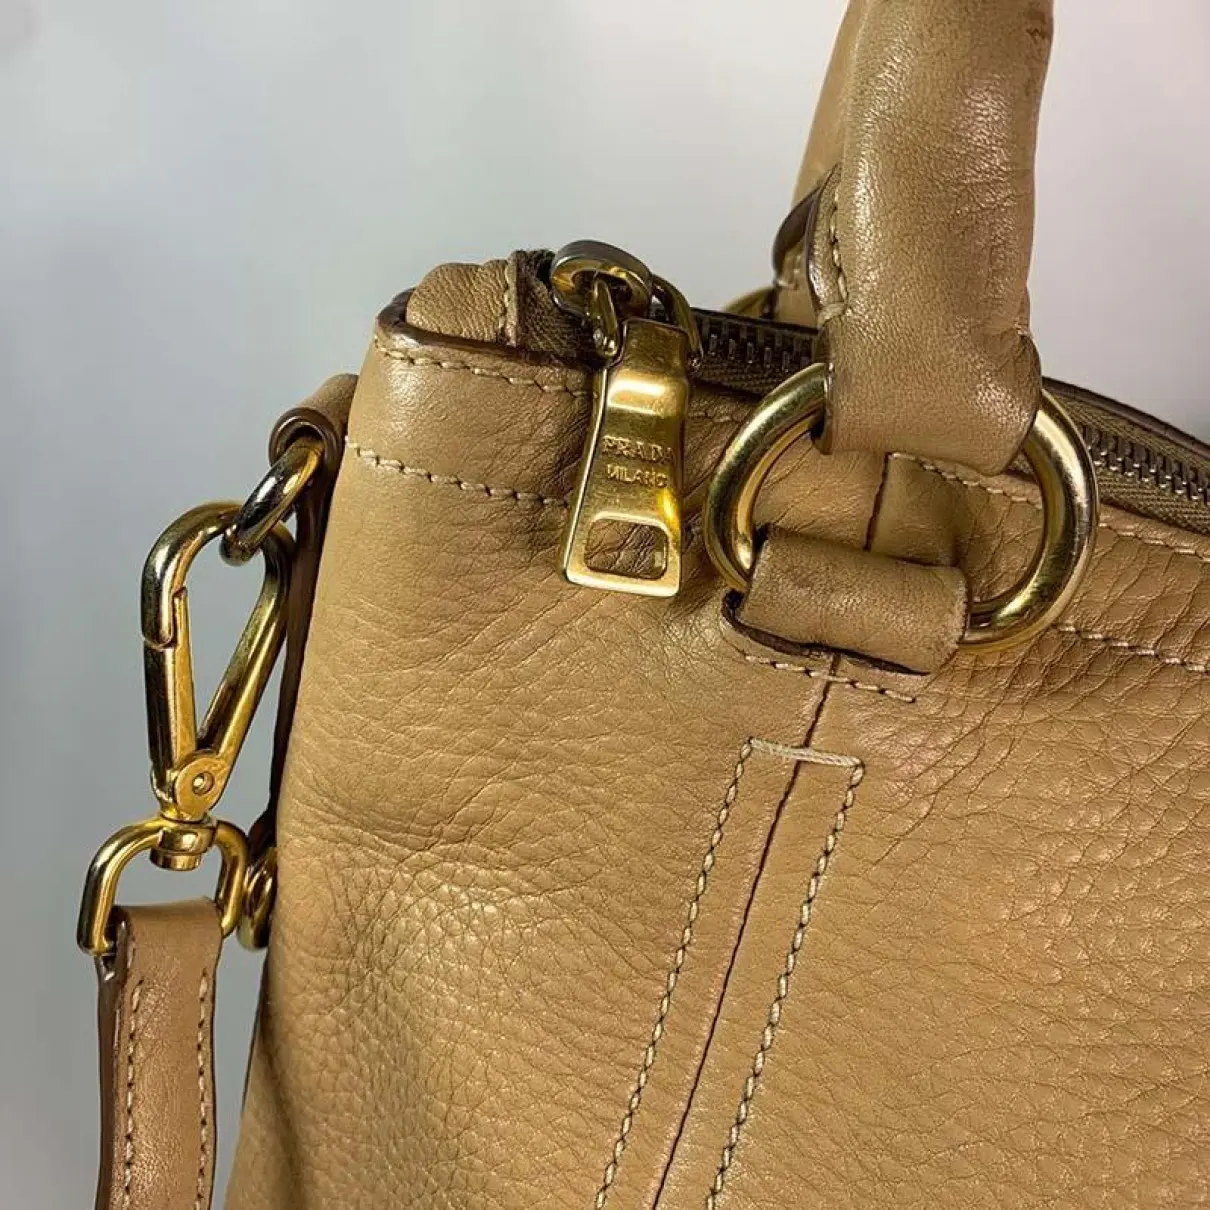 Bowling leather handbag Prada - Vintage